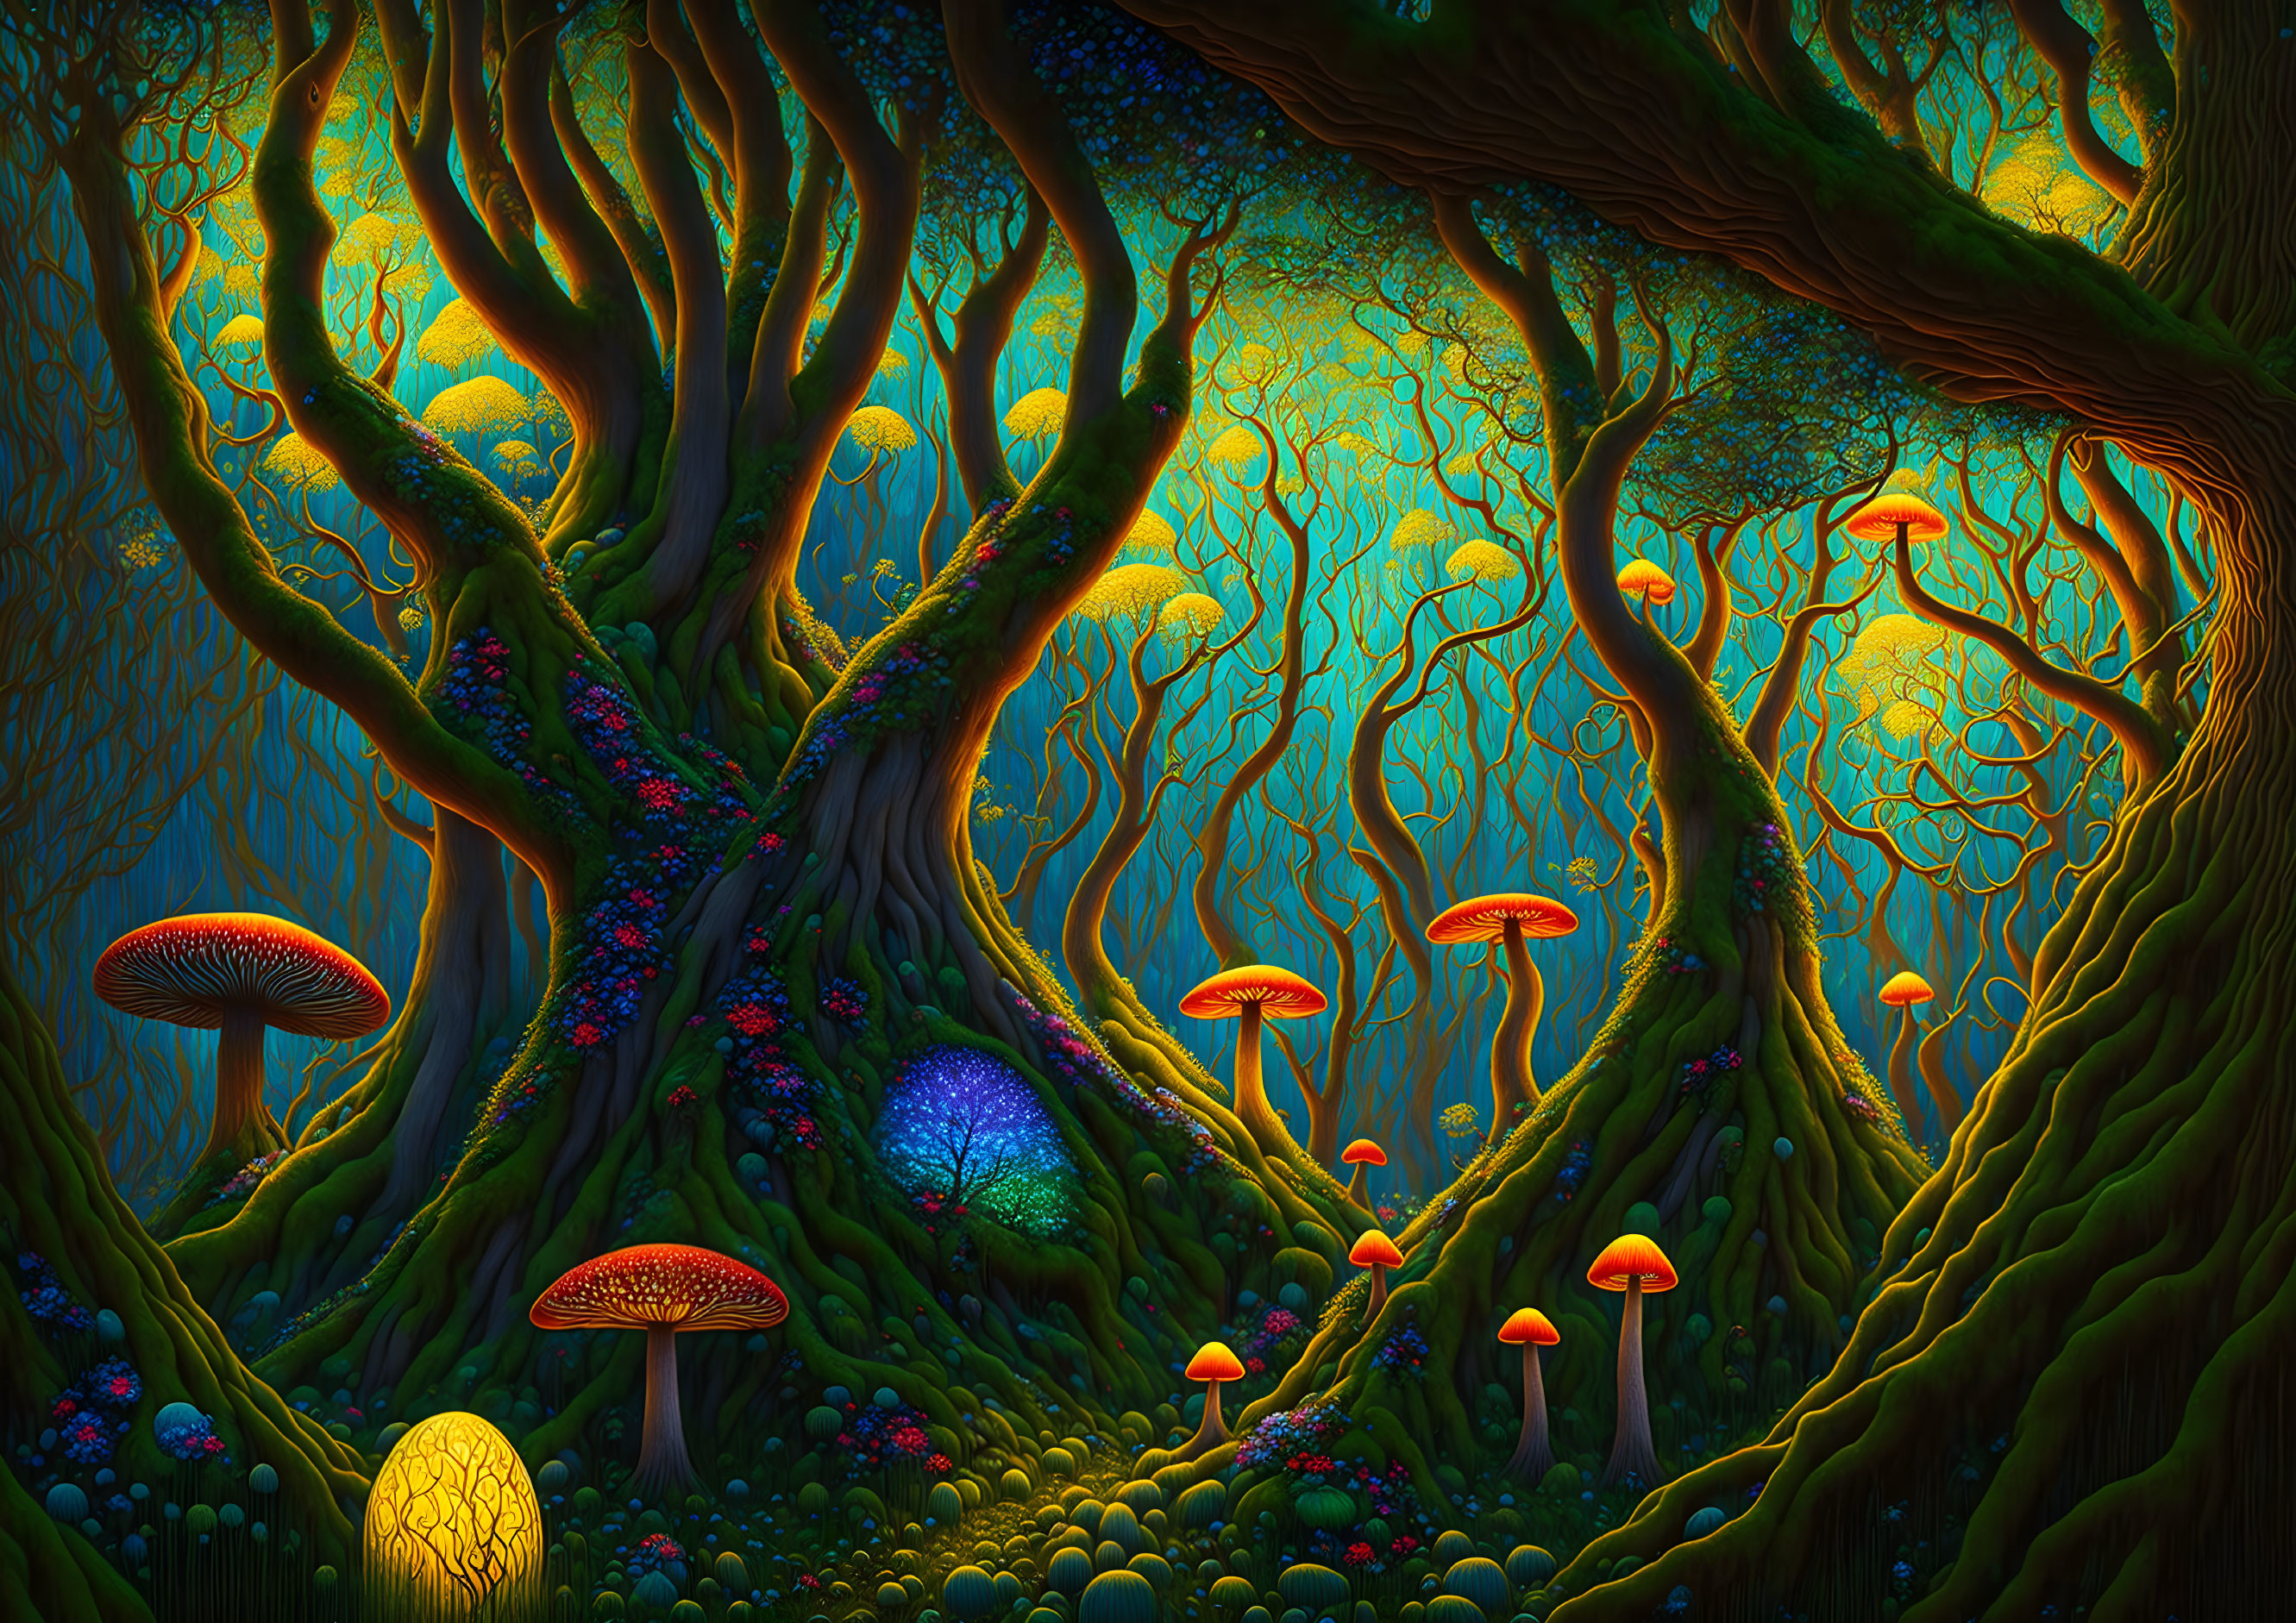 Luminescent mushrooms in fantastical forest scene